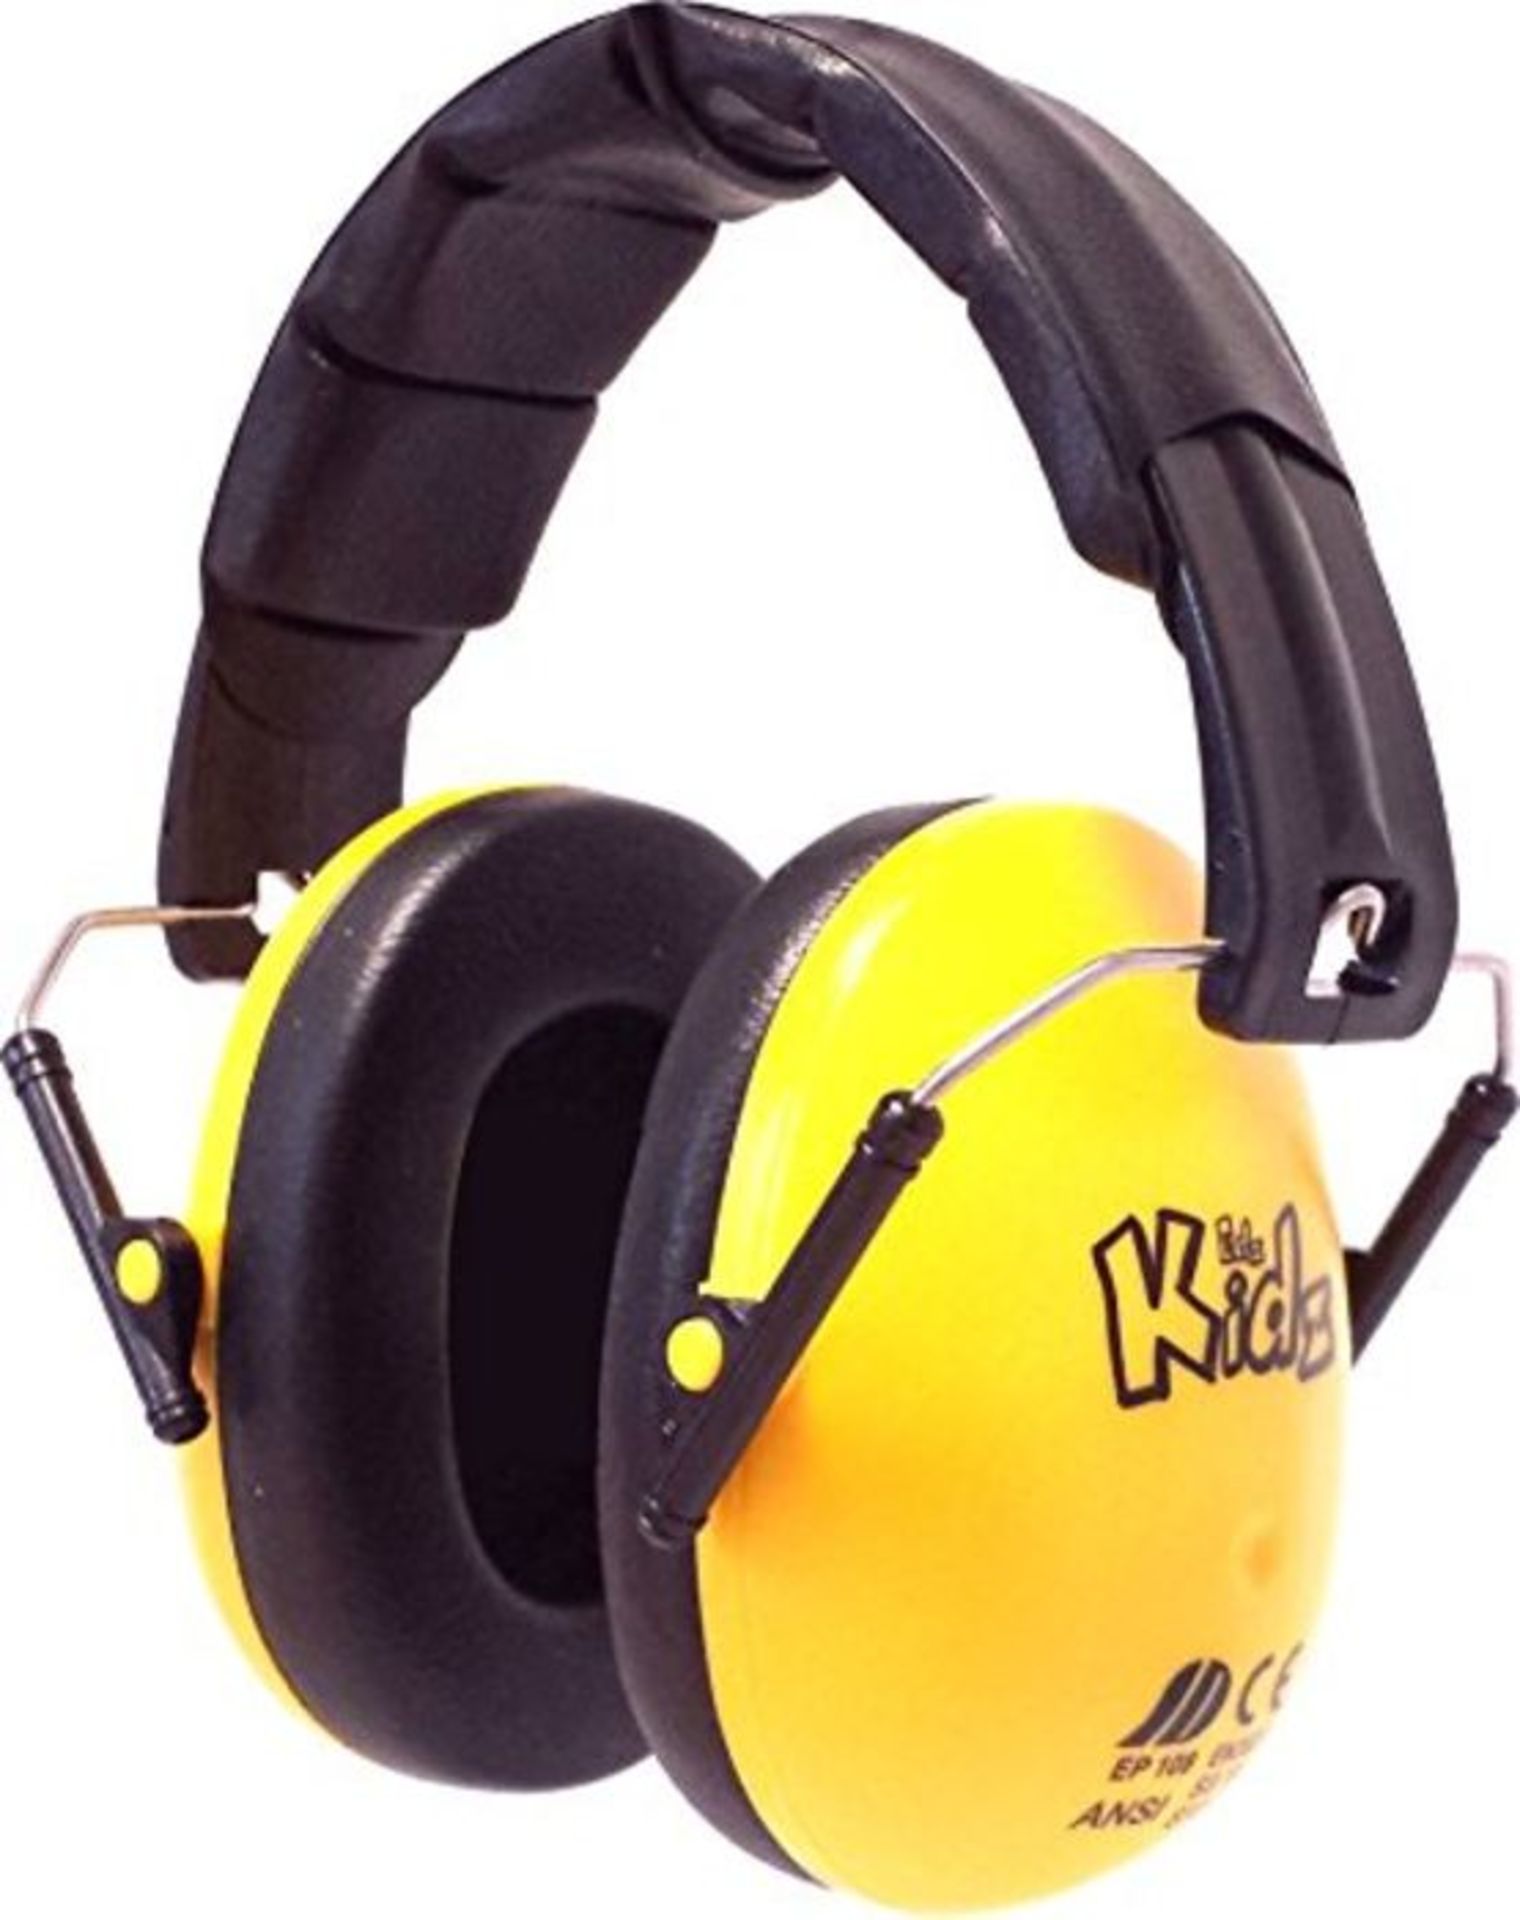 Edz Kidz Ear Defenders. Ear Protection for Toddlers Through Teens. (Yellow)